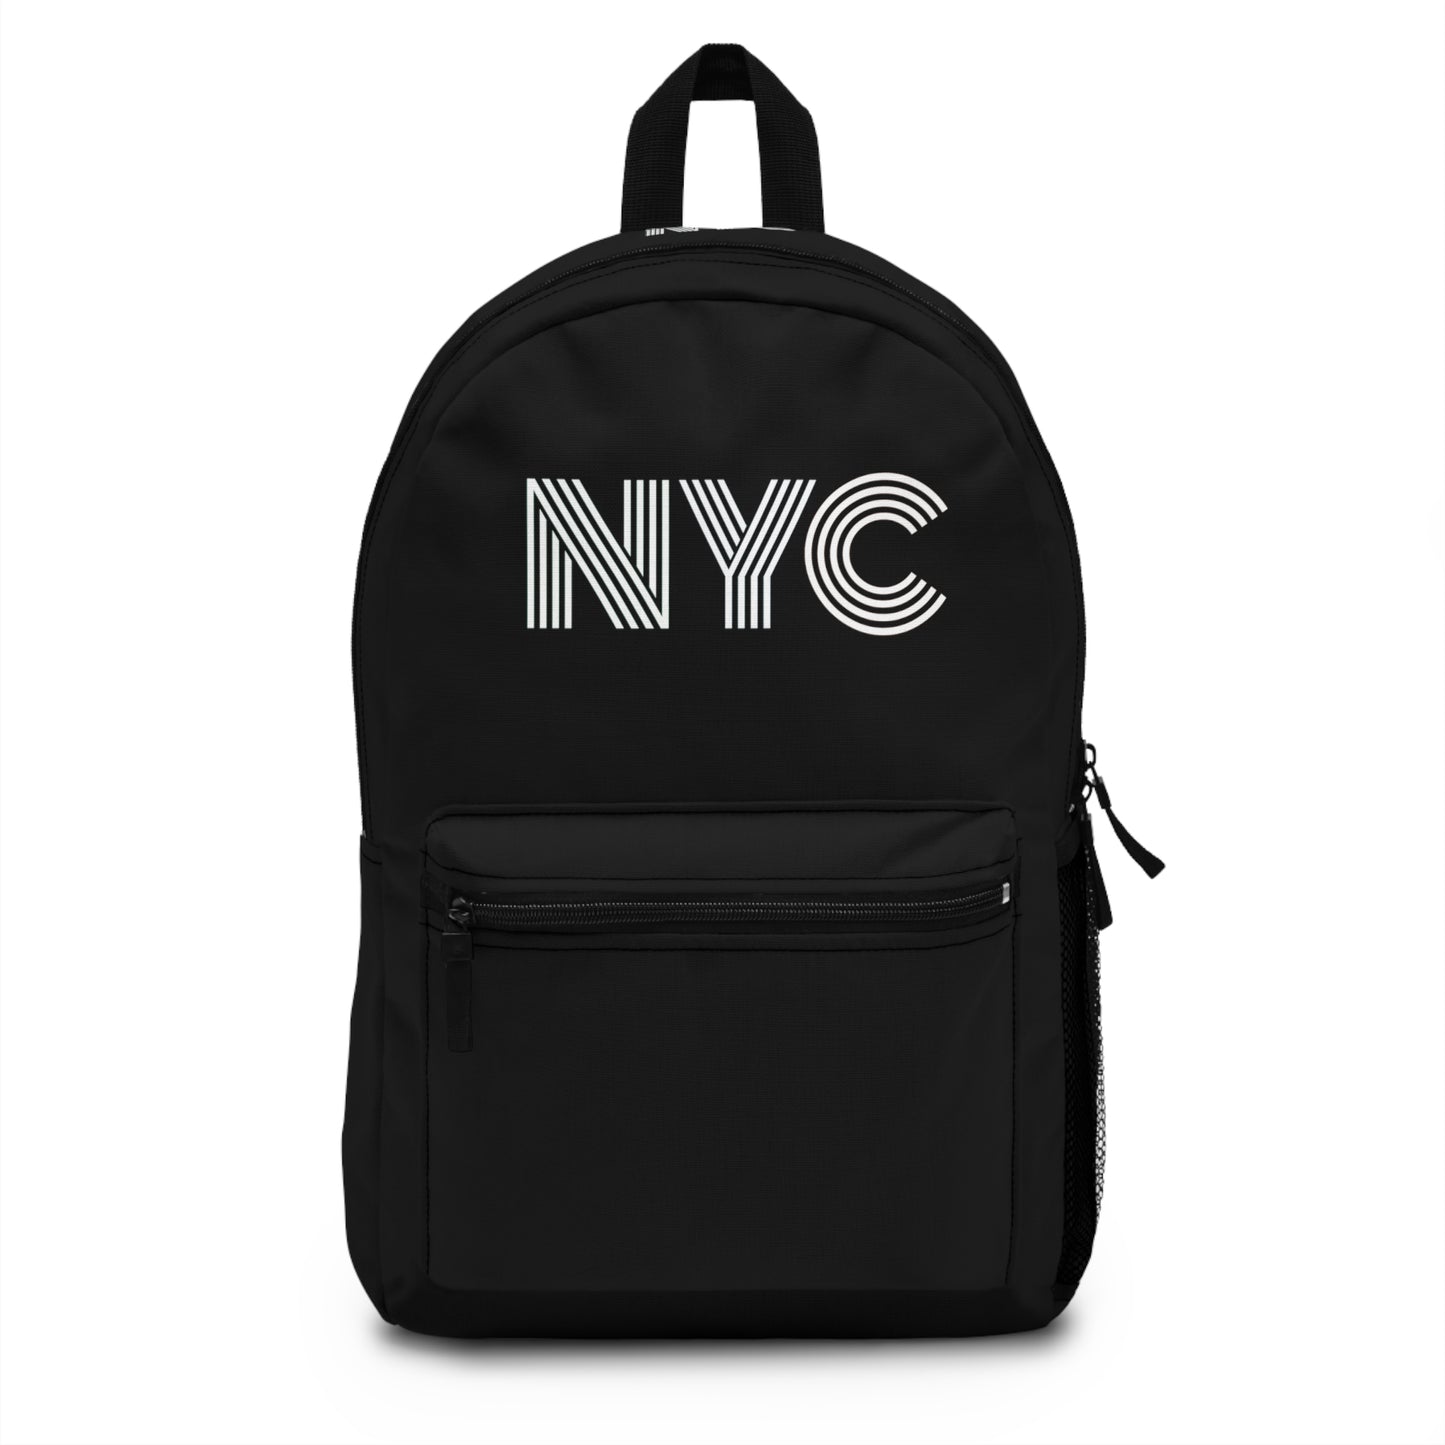 NYC Backpack